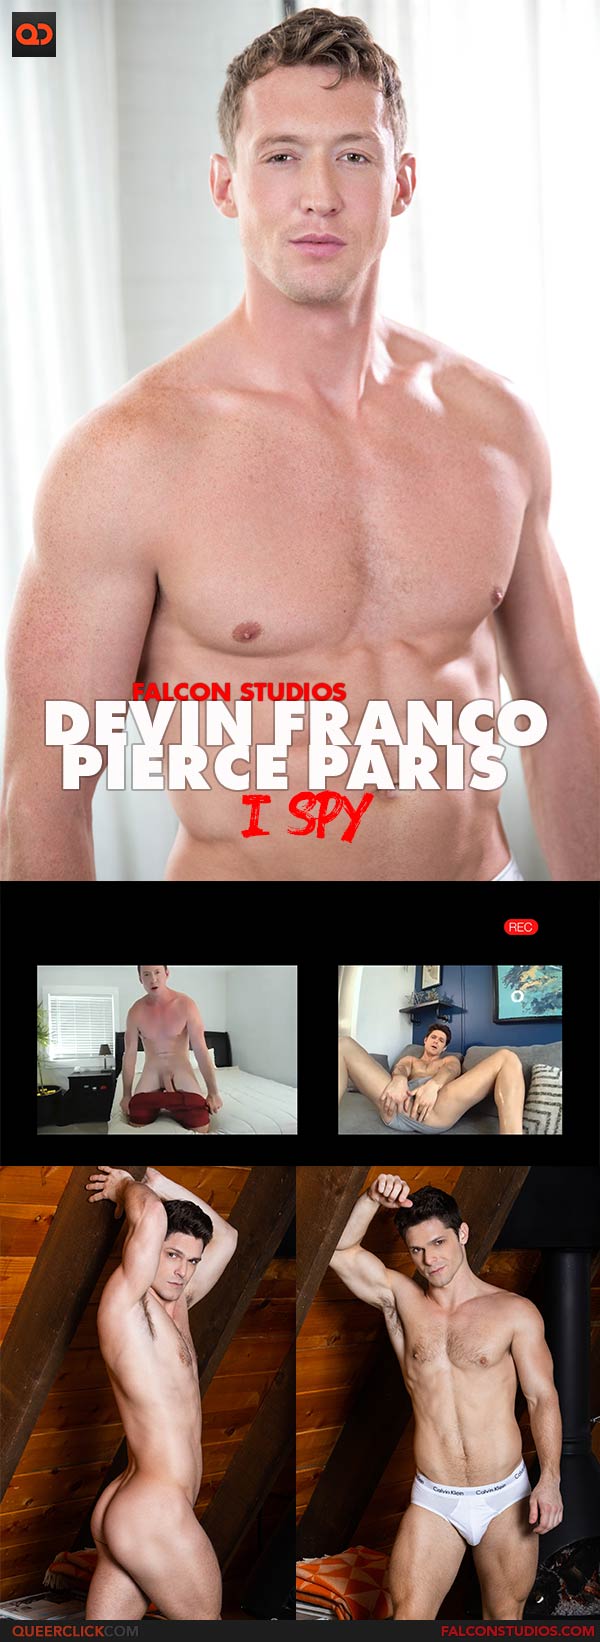 Falcon Studios: Devin Franco and Pierce Paris  - I Spy